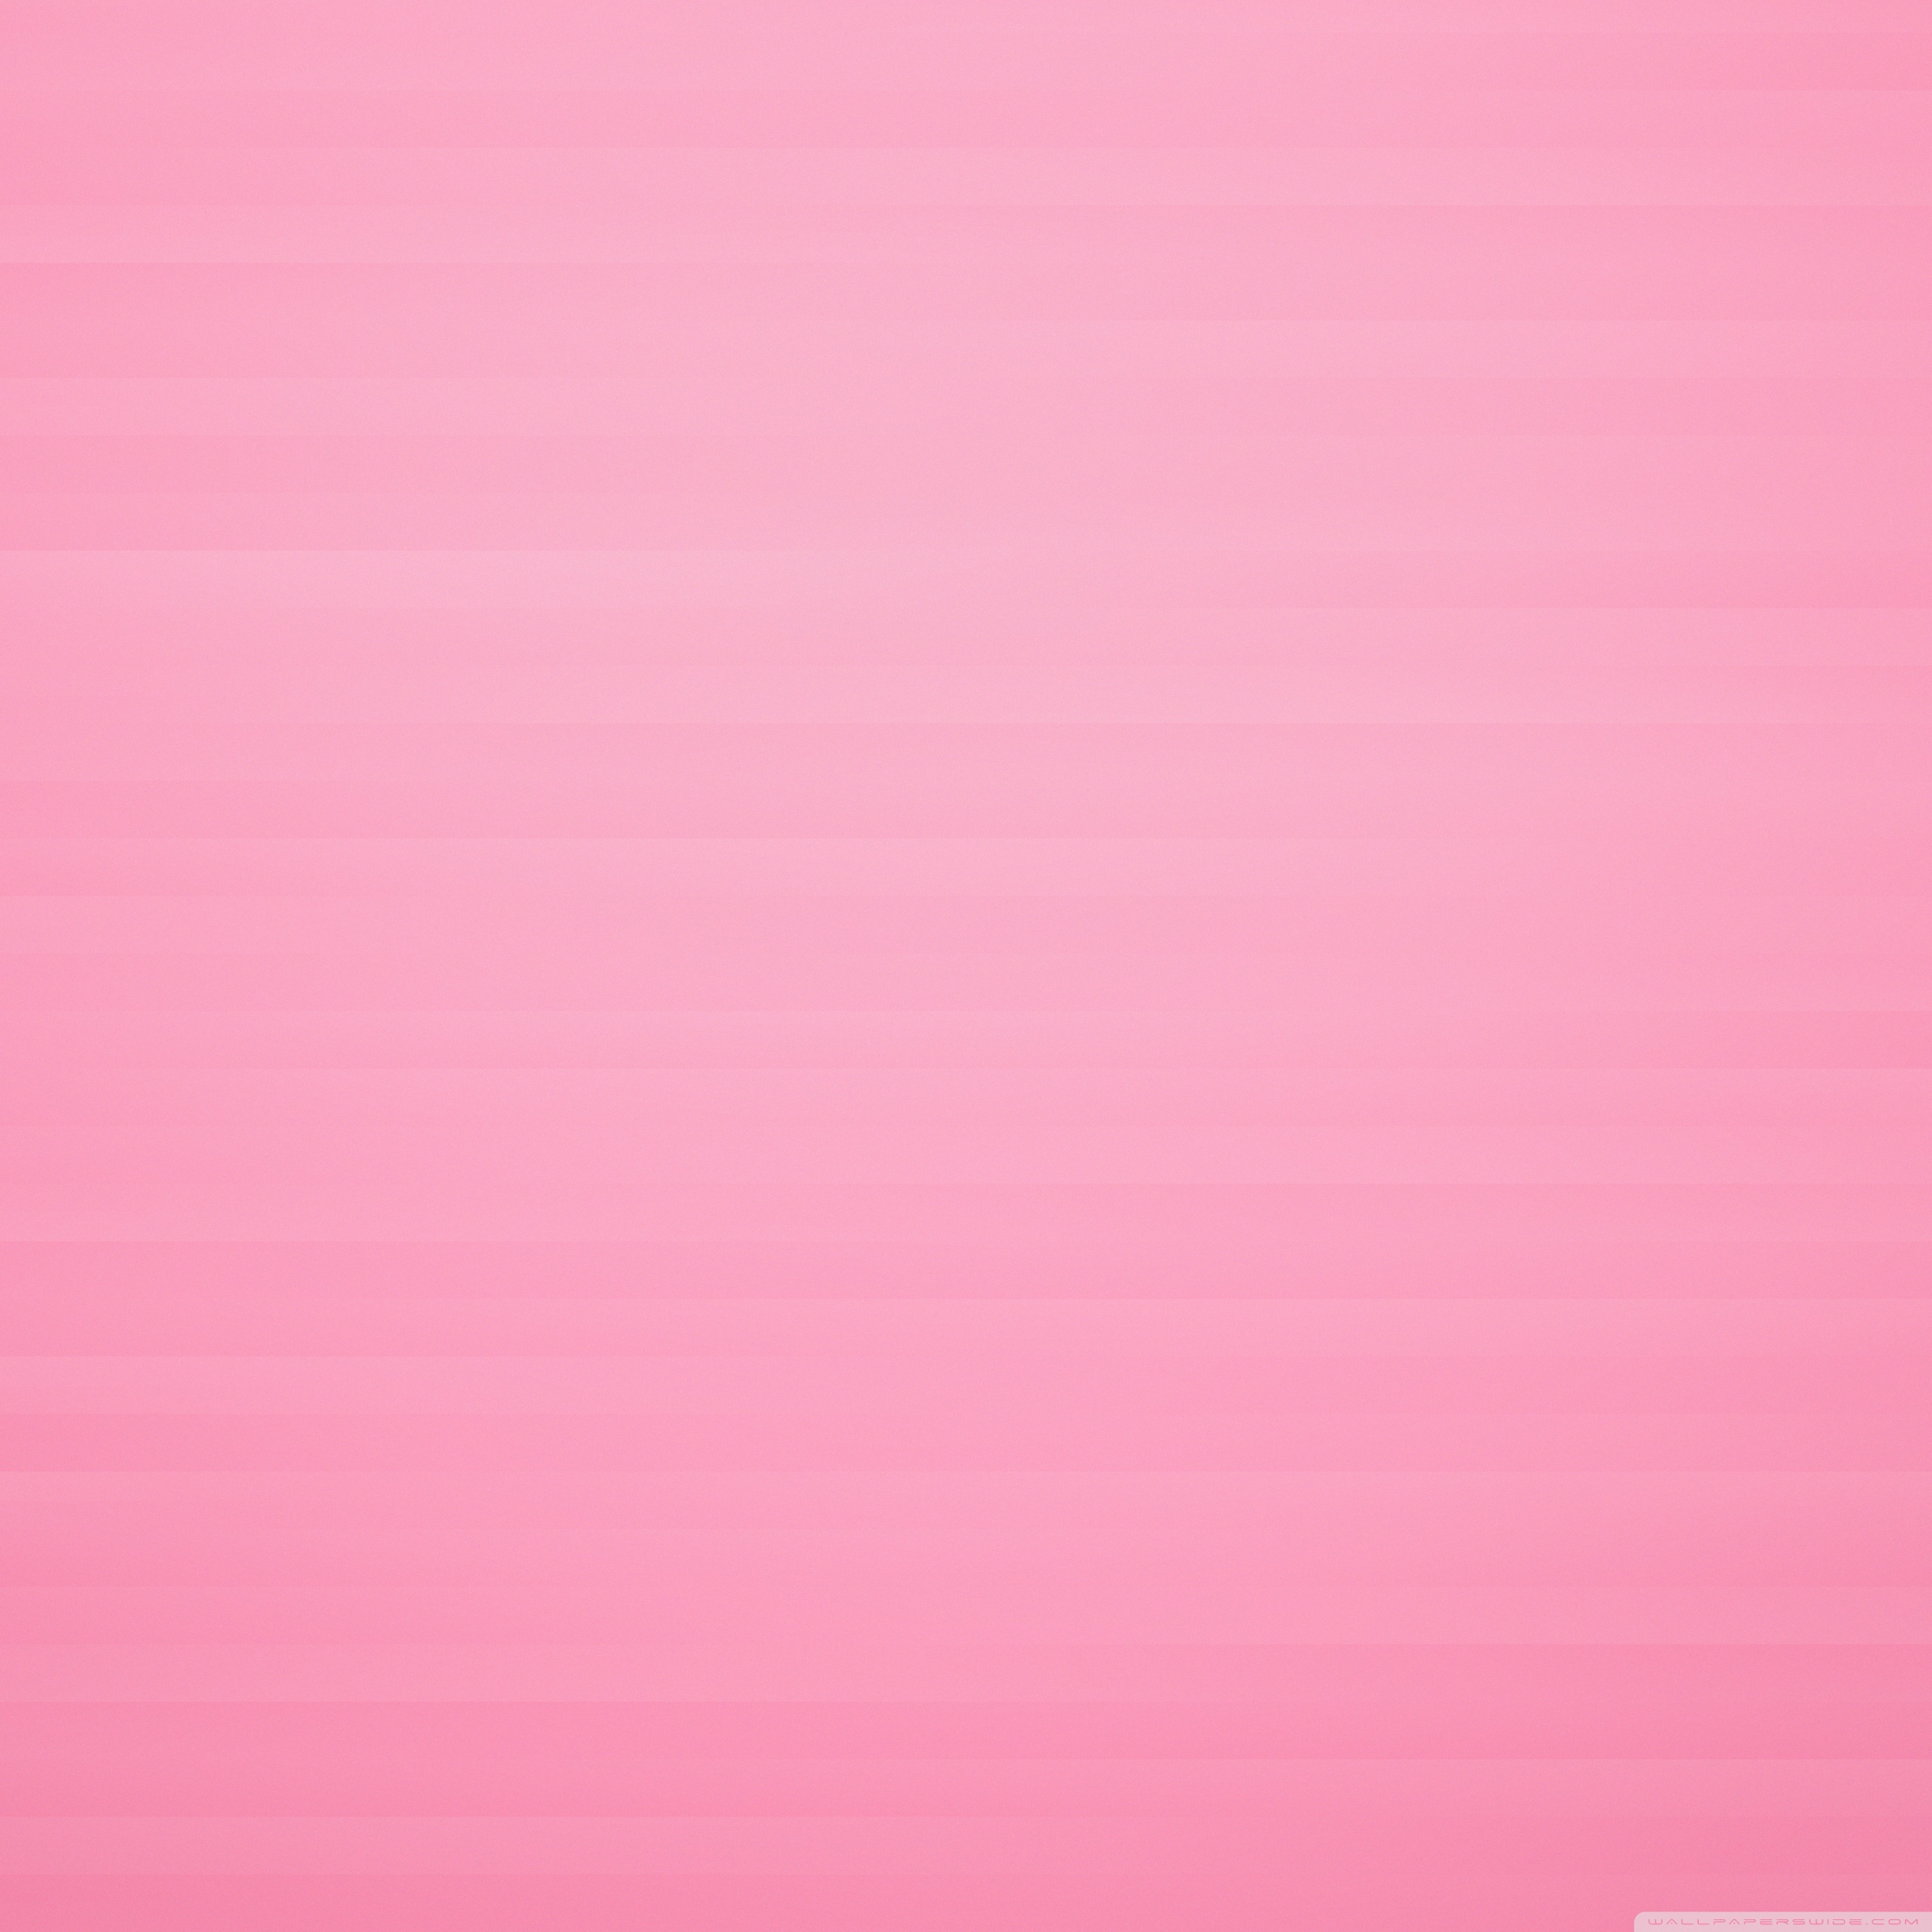 Pink Stripes Background Ultra Hd Desktop Background Wallpaper For Multi Display Dual Triple Monitor Tablet Smartphone